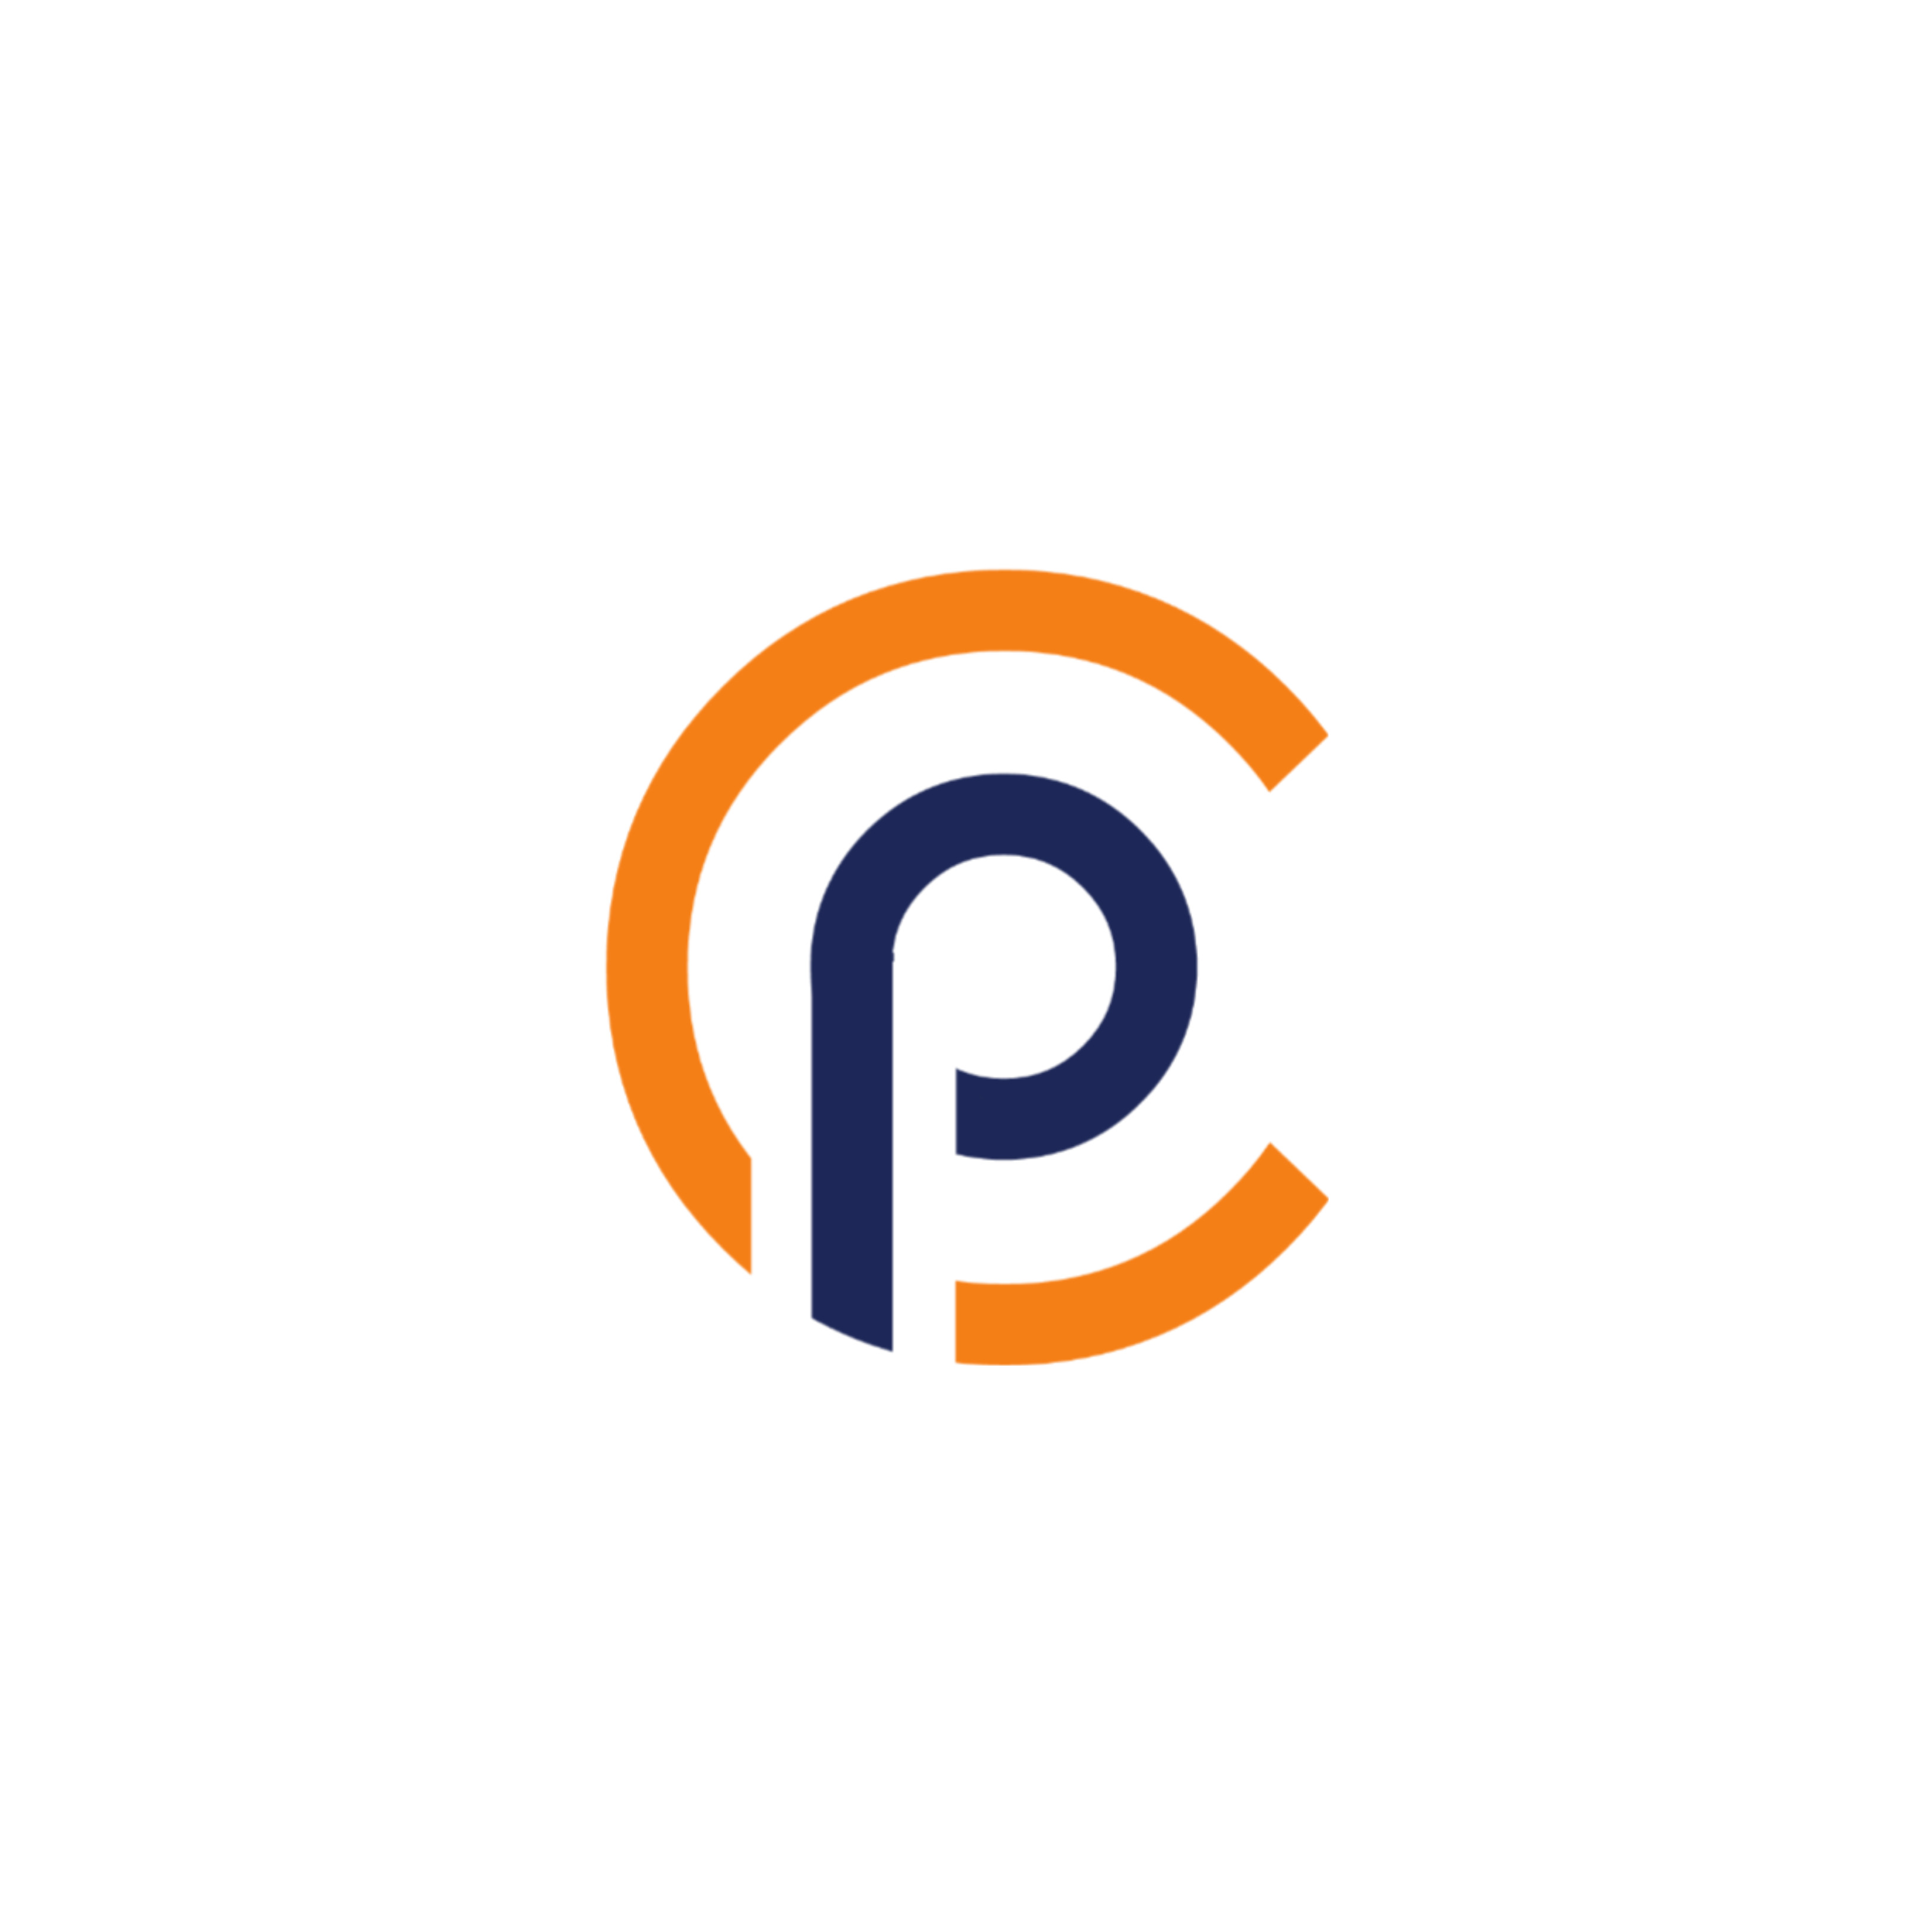 cp or pc initial logo design vector icon symbol luxury - Stock Image -  Everypixel